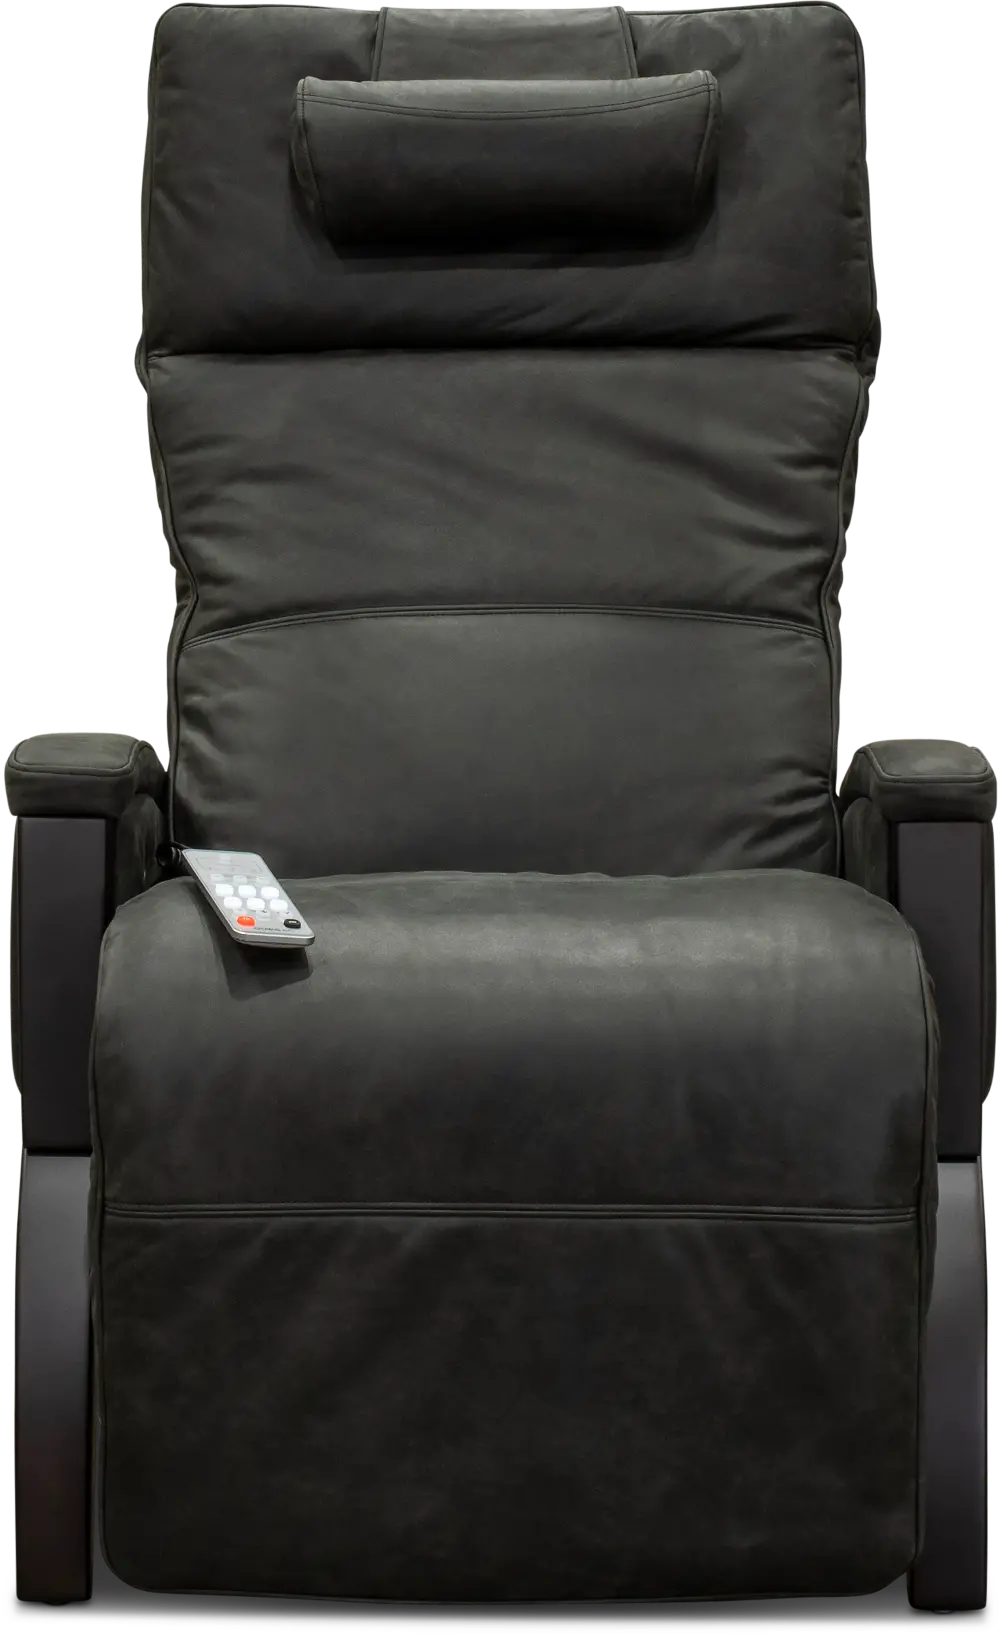 SV-630-29 Black Pepper Leather Zero Gravity Massage Chair - Svago-1